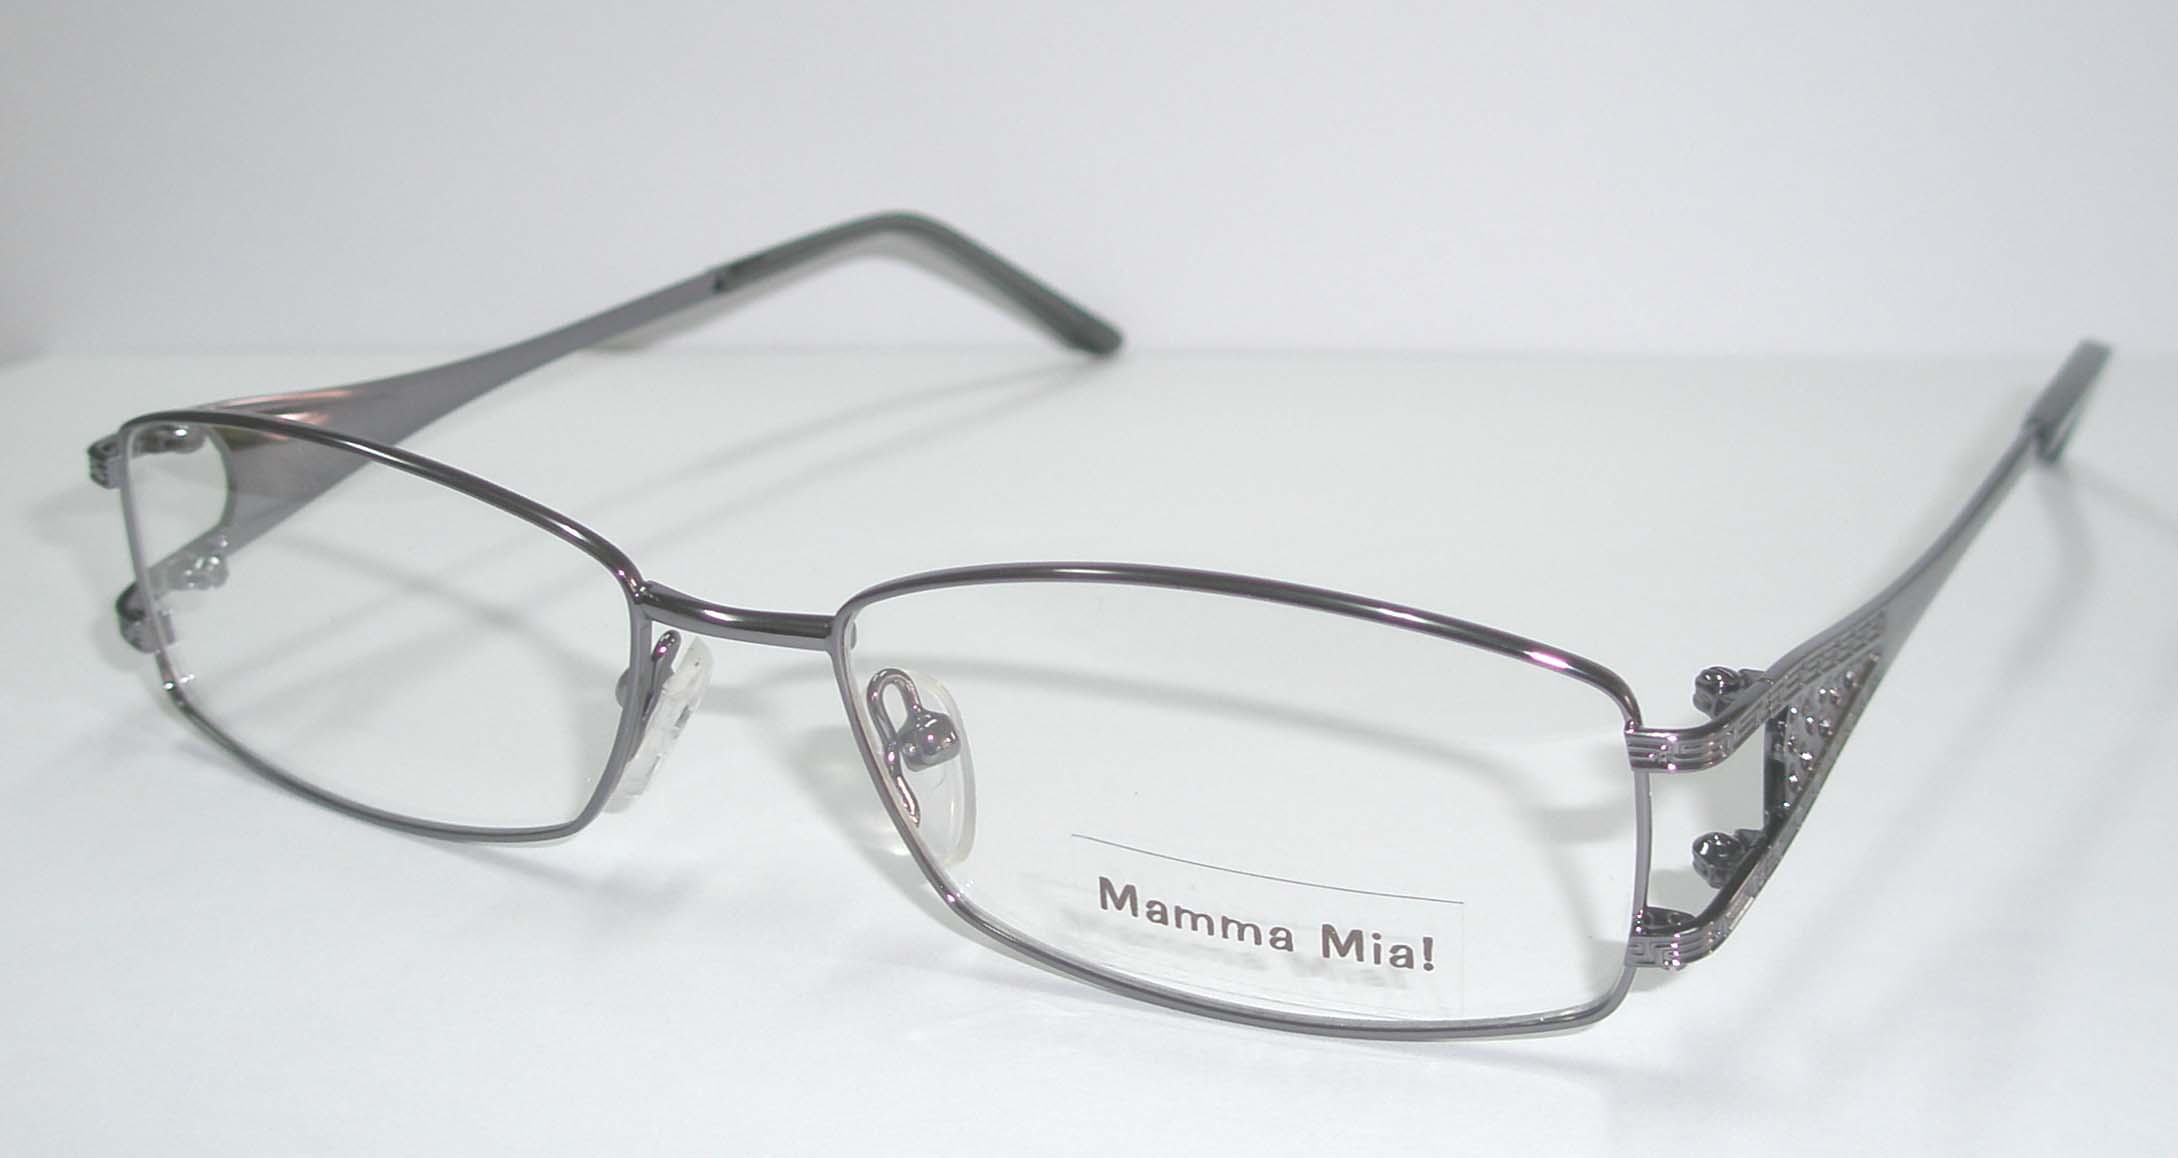  Eyewear Metal Optical Frame (Оптические очки Metal Frame)